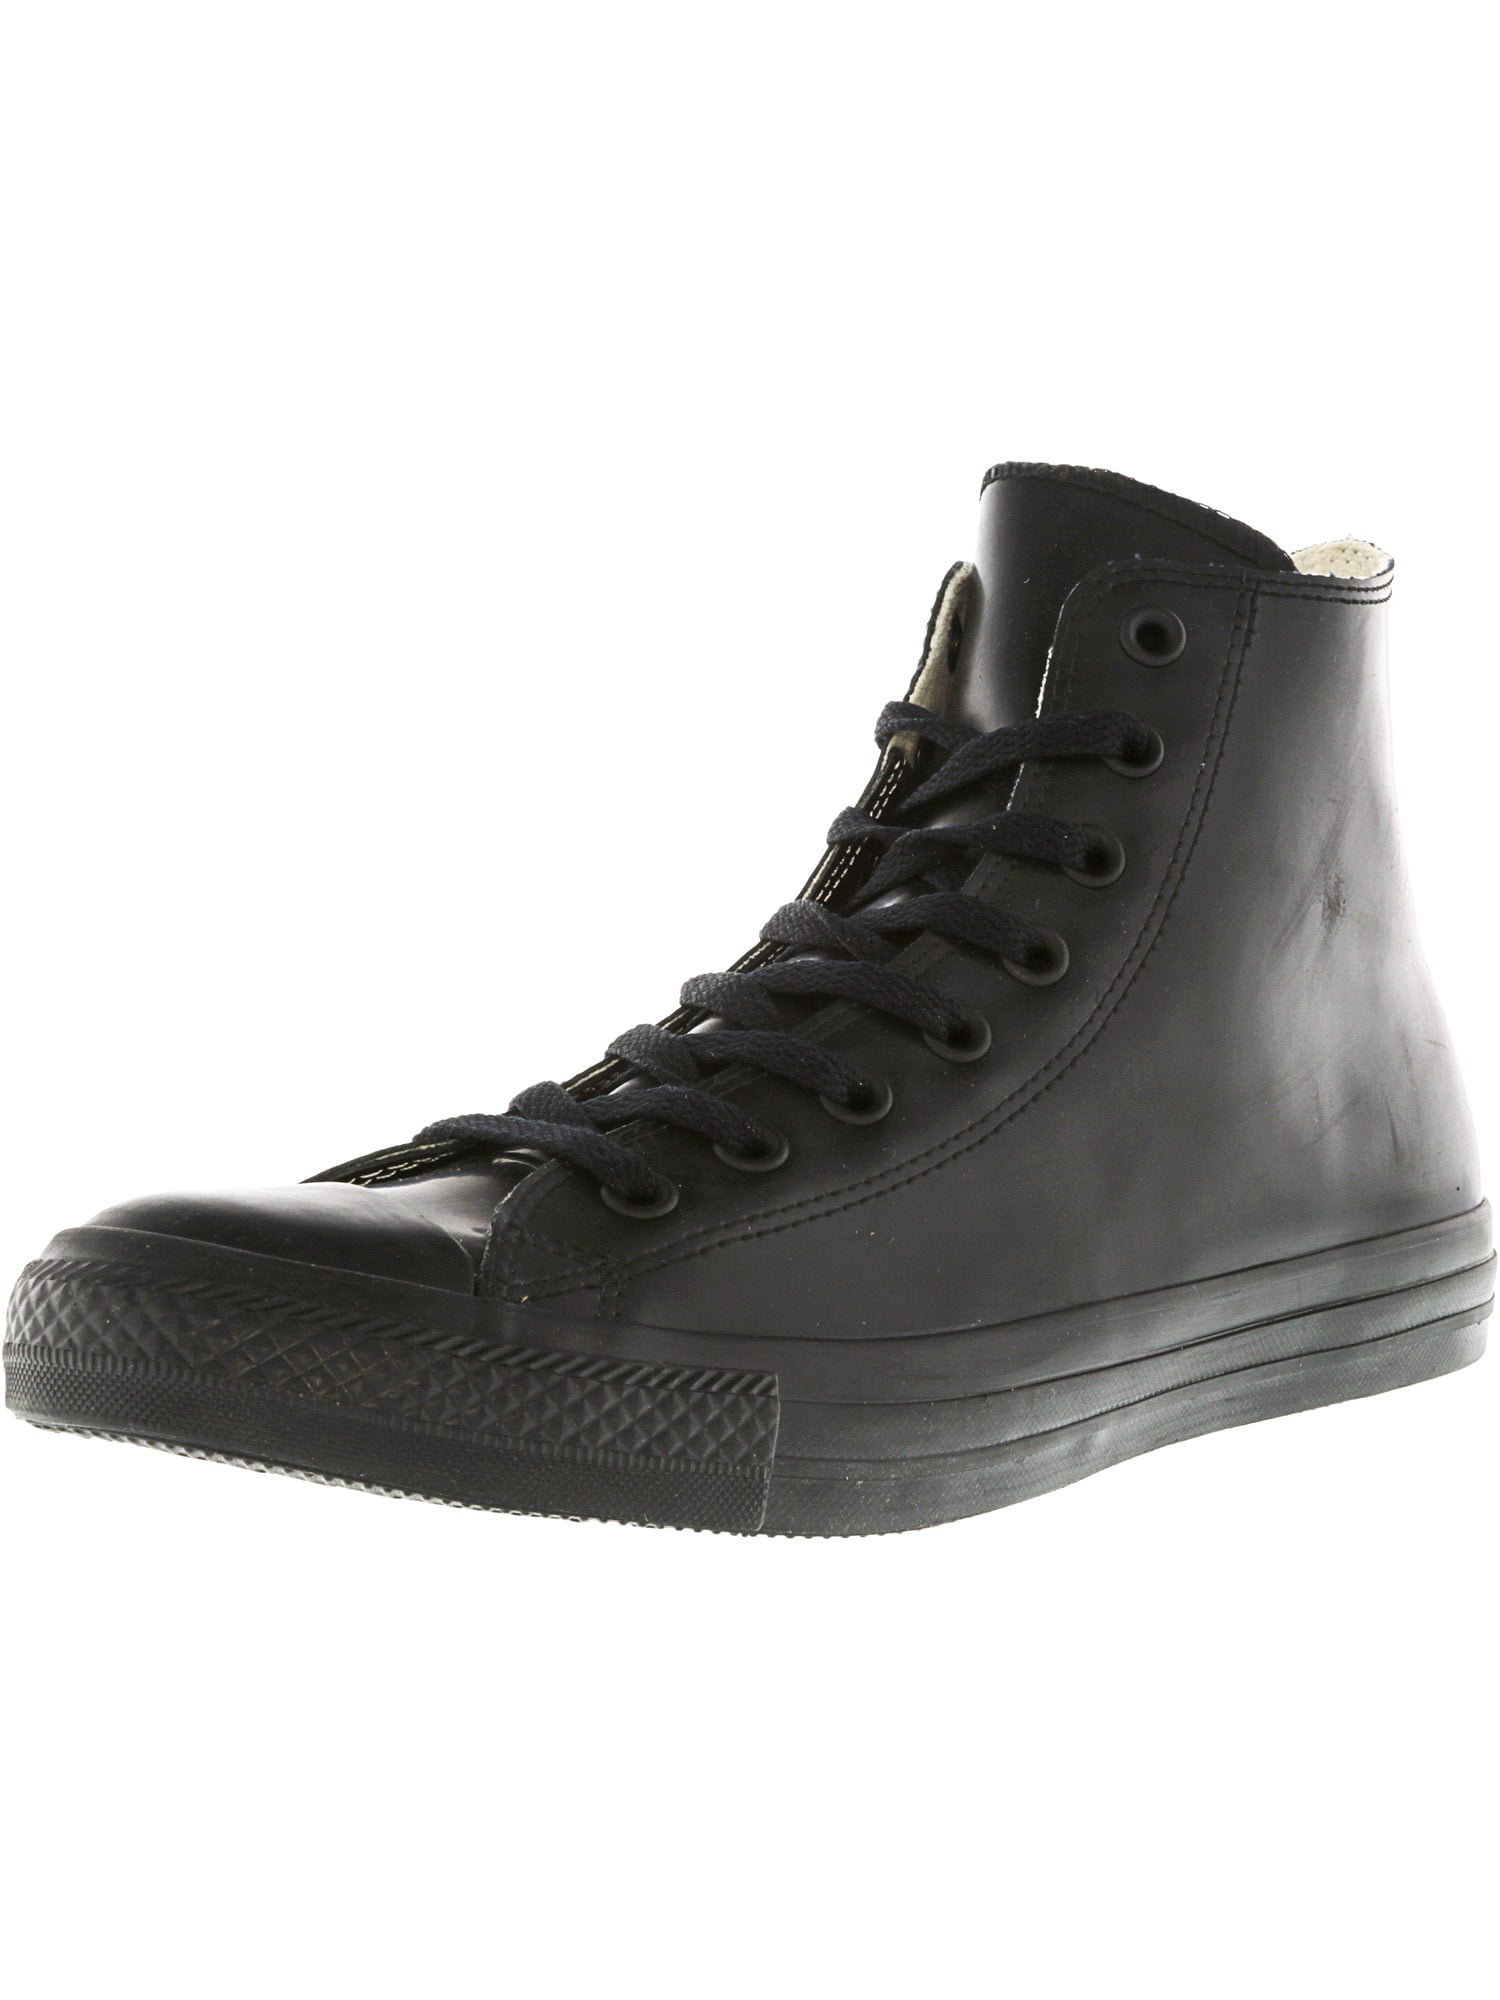 Prisoner of war solidarity Vinegar Converse Rubber Rain Boot Black High-Top Shoe - 12M / 10M - Walmart.com